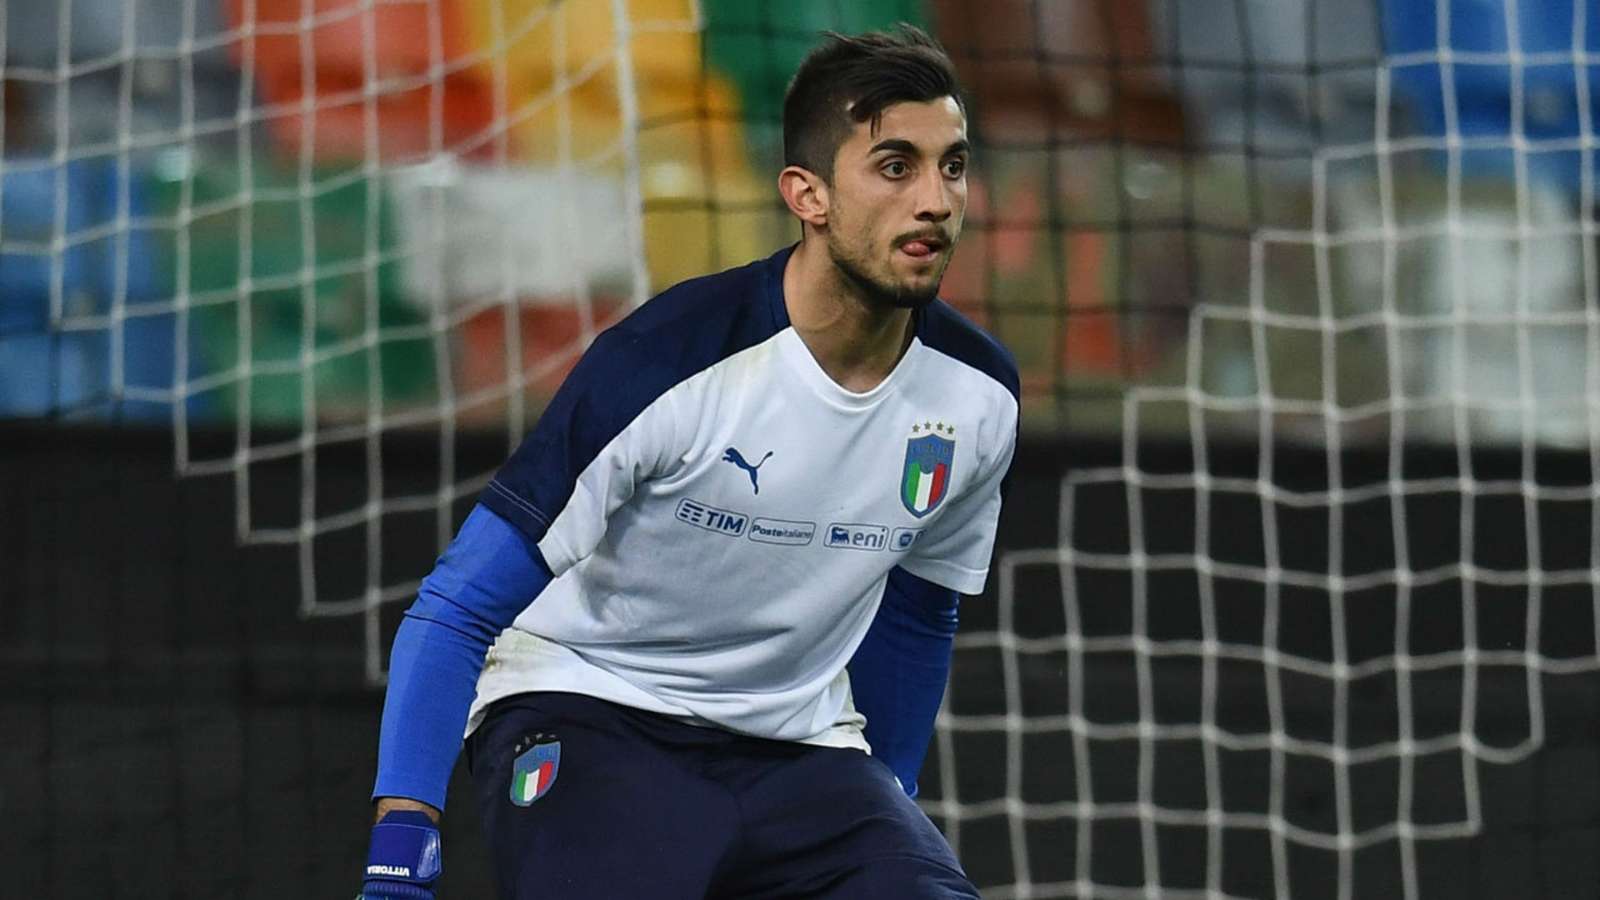 دروازه بان ایتالیا-ایتالیا-تیم ملی ایتالیا-Italy